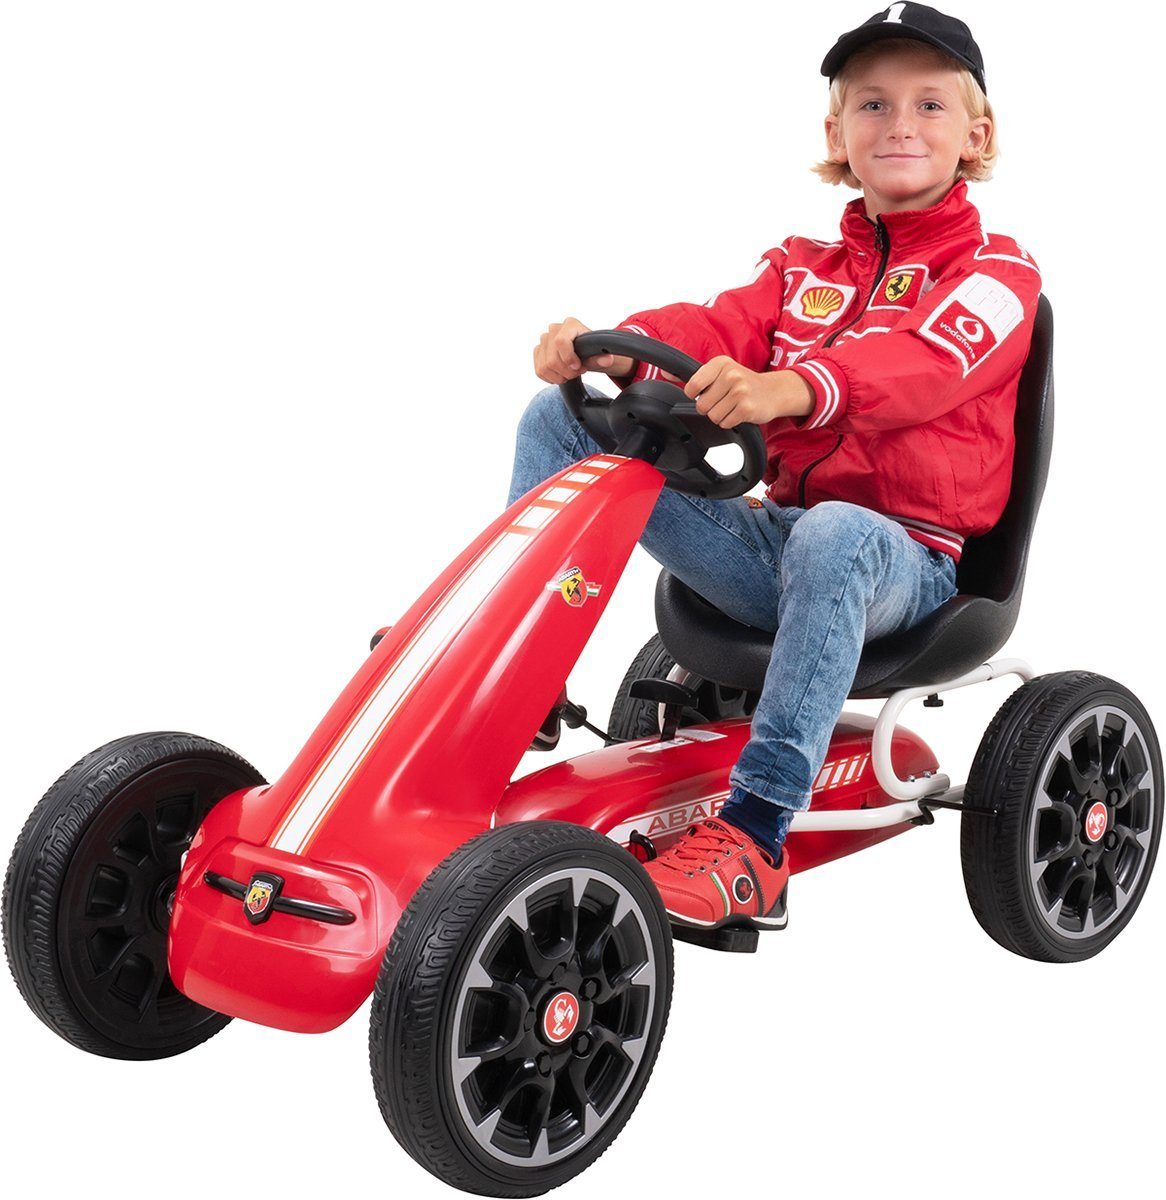 Actionbikes Motors Go-Kart Kinder Pedal Go Kart Abarth FS595 - Handbremse - 30 kg Traglast, Kinder Fahrzeug Spielzeug ab 4-10 Jahre- Tretfahrzeug - Kinderkart